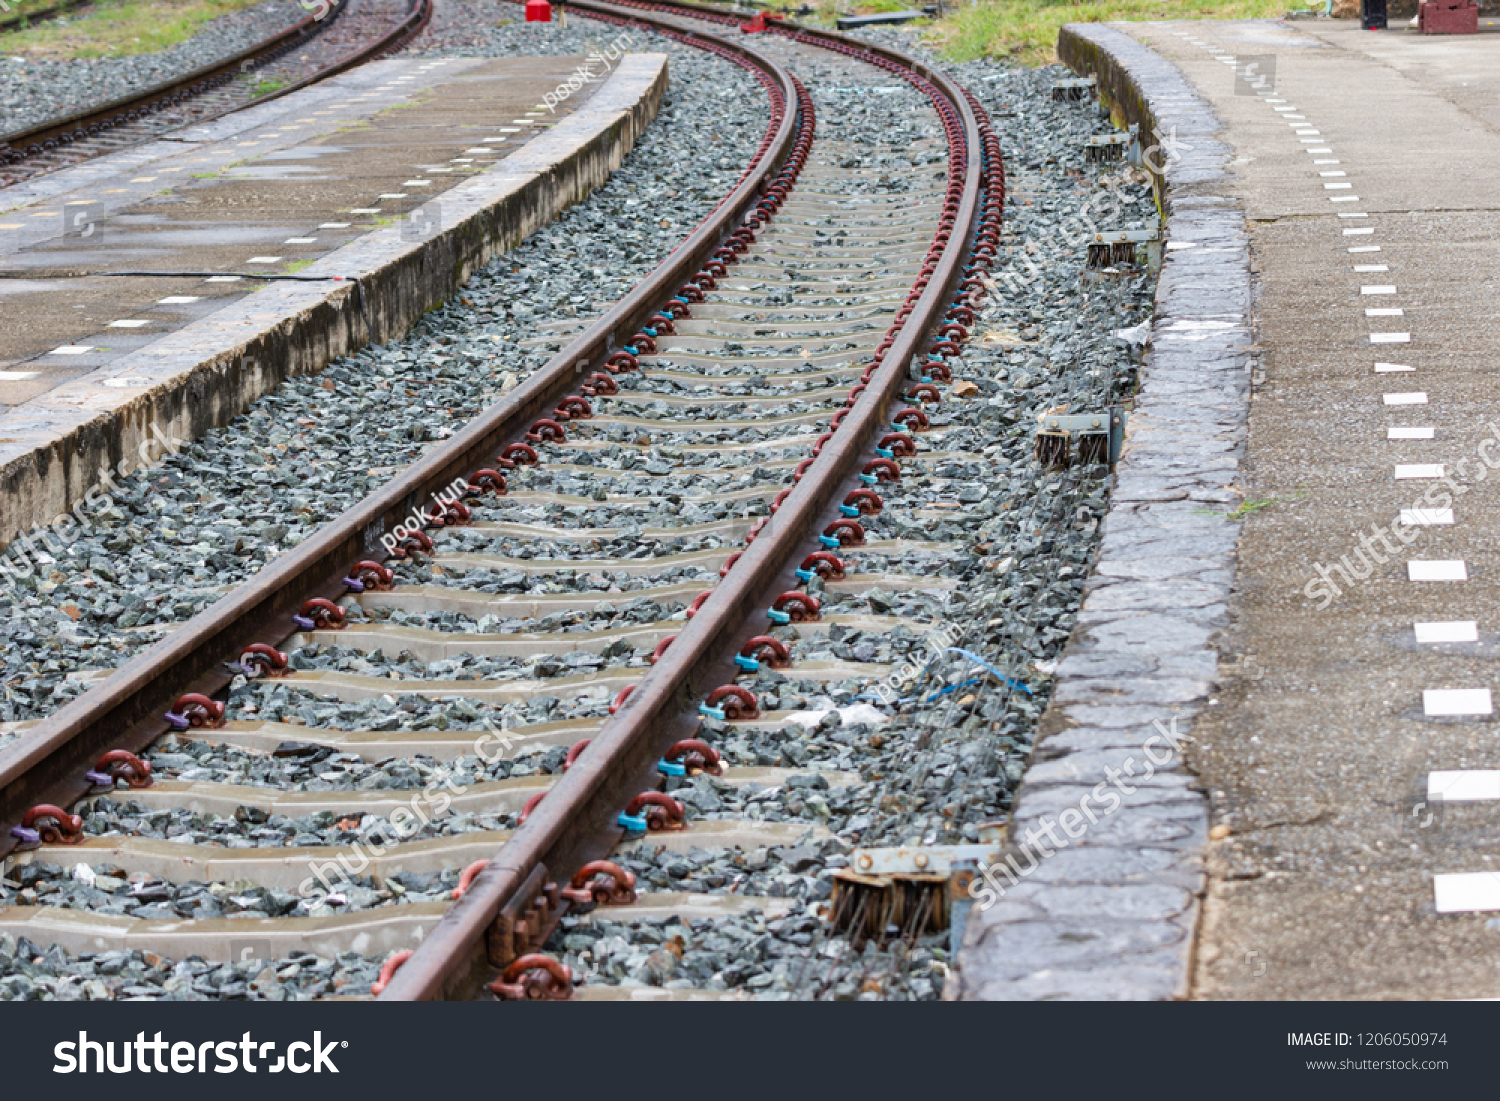 The railroad tracks curve along the way For train travel Bangkok Thailand. #1206050974